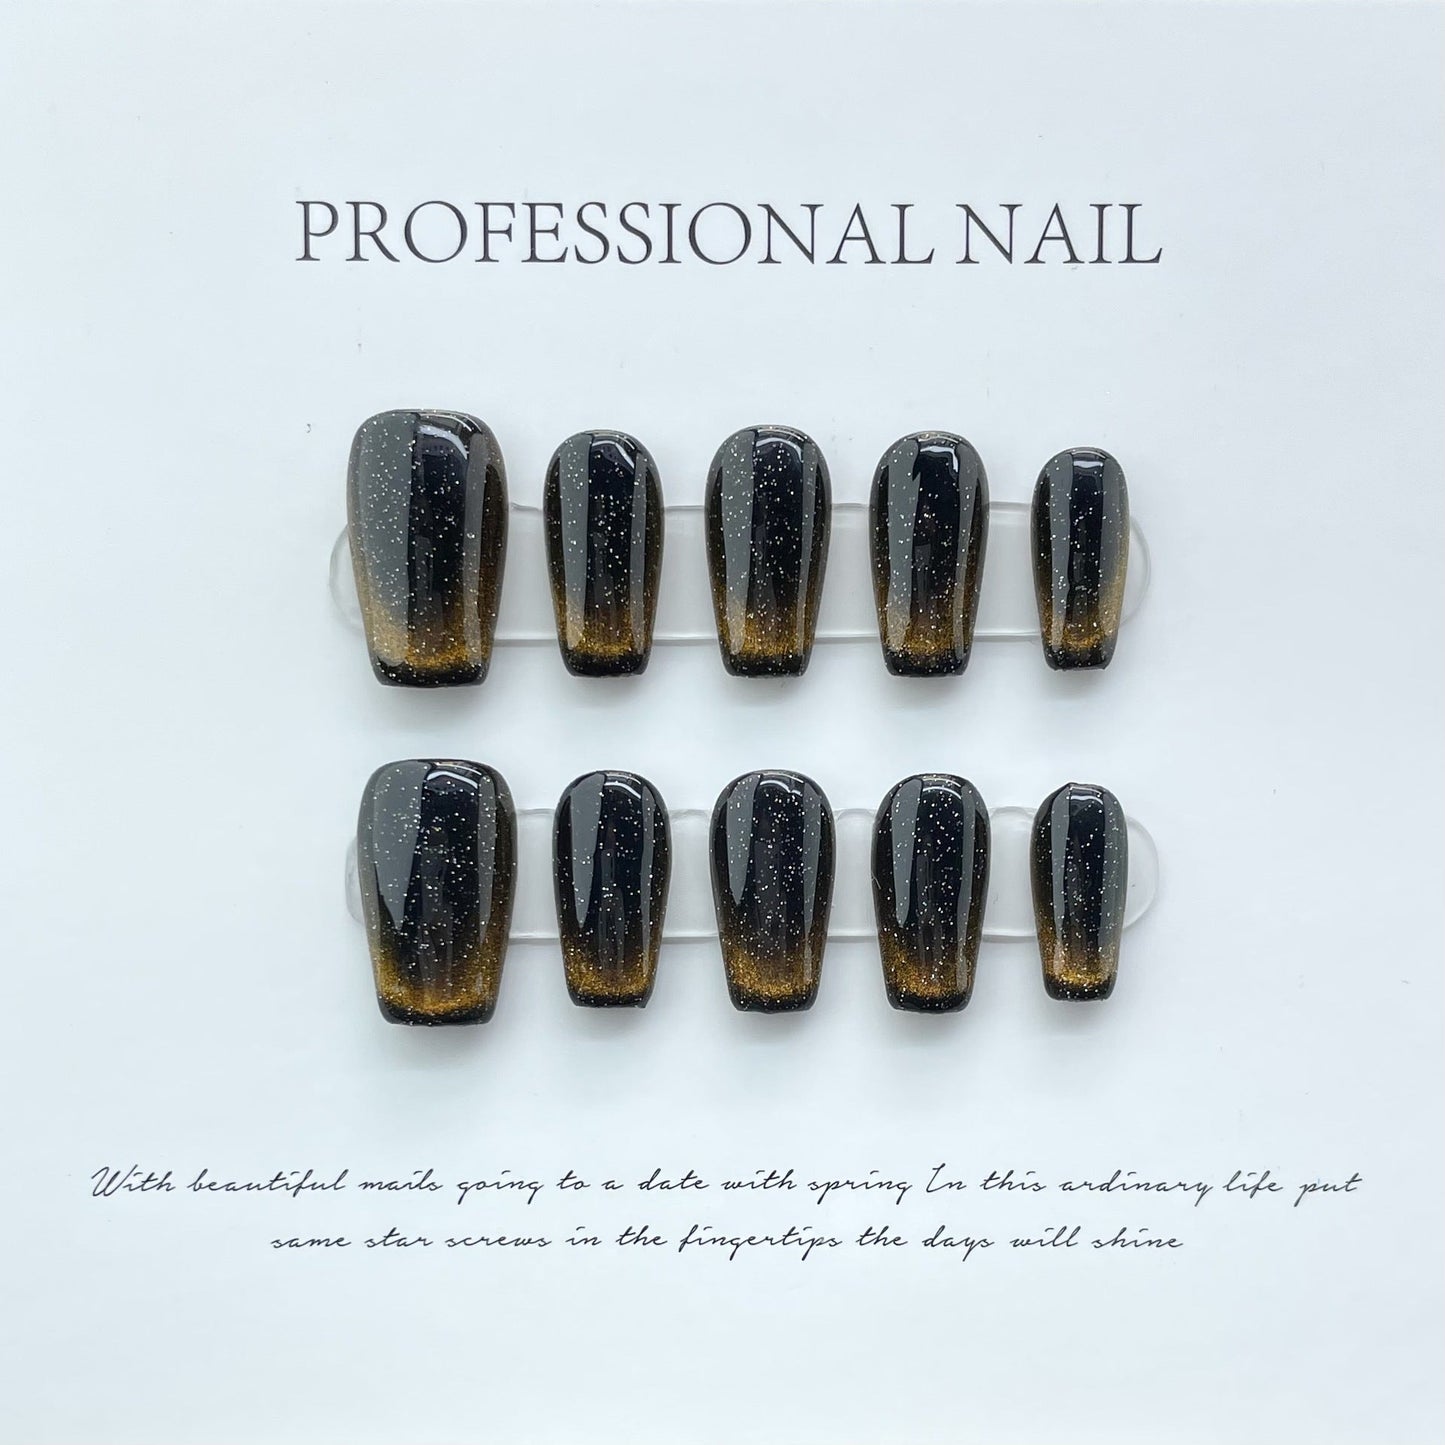 708 Cateye Effect style press on nagels 100% handgemaakte kunstnagels wit goud